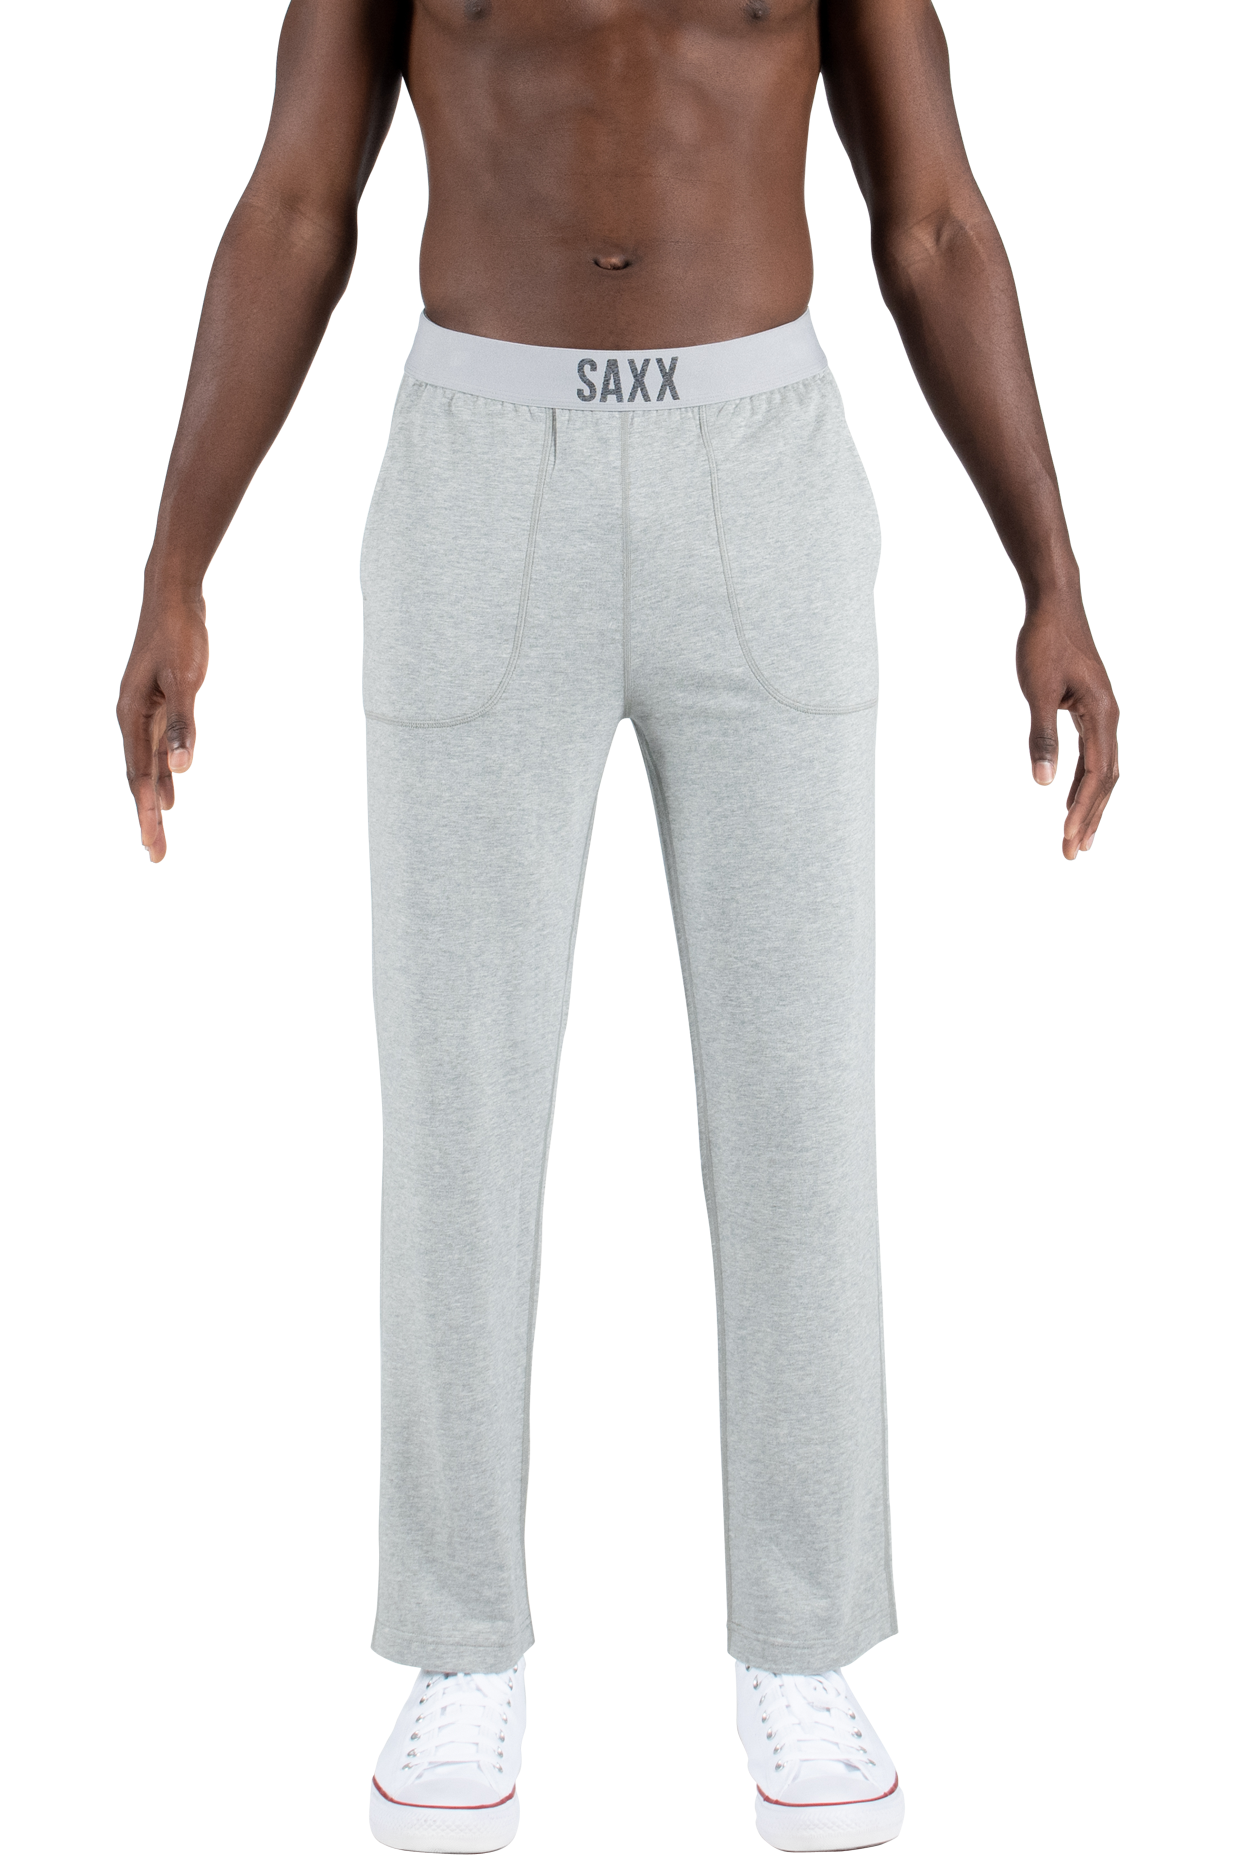 Saxx 3Six Five Lounge Pant - Style SXLP37B AGH, front